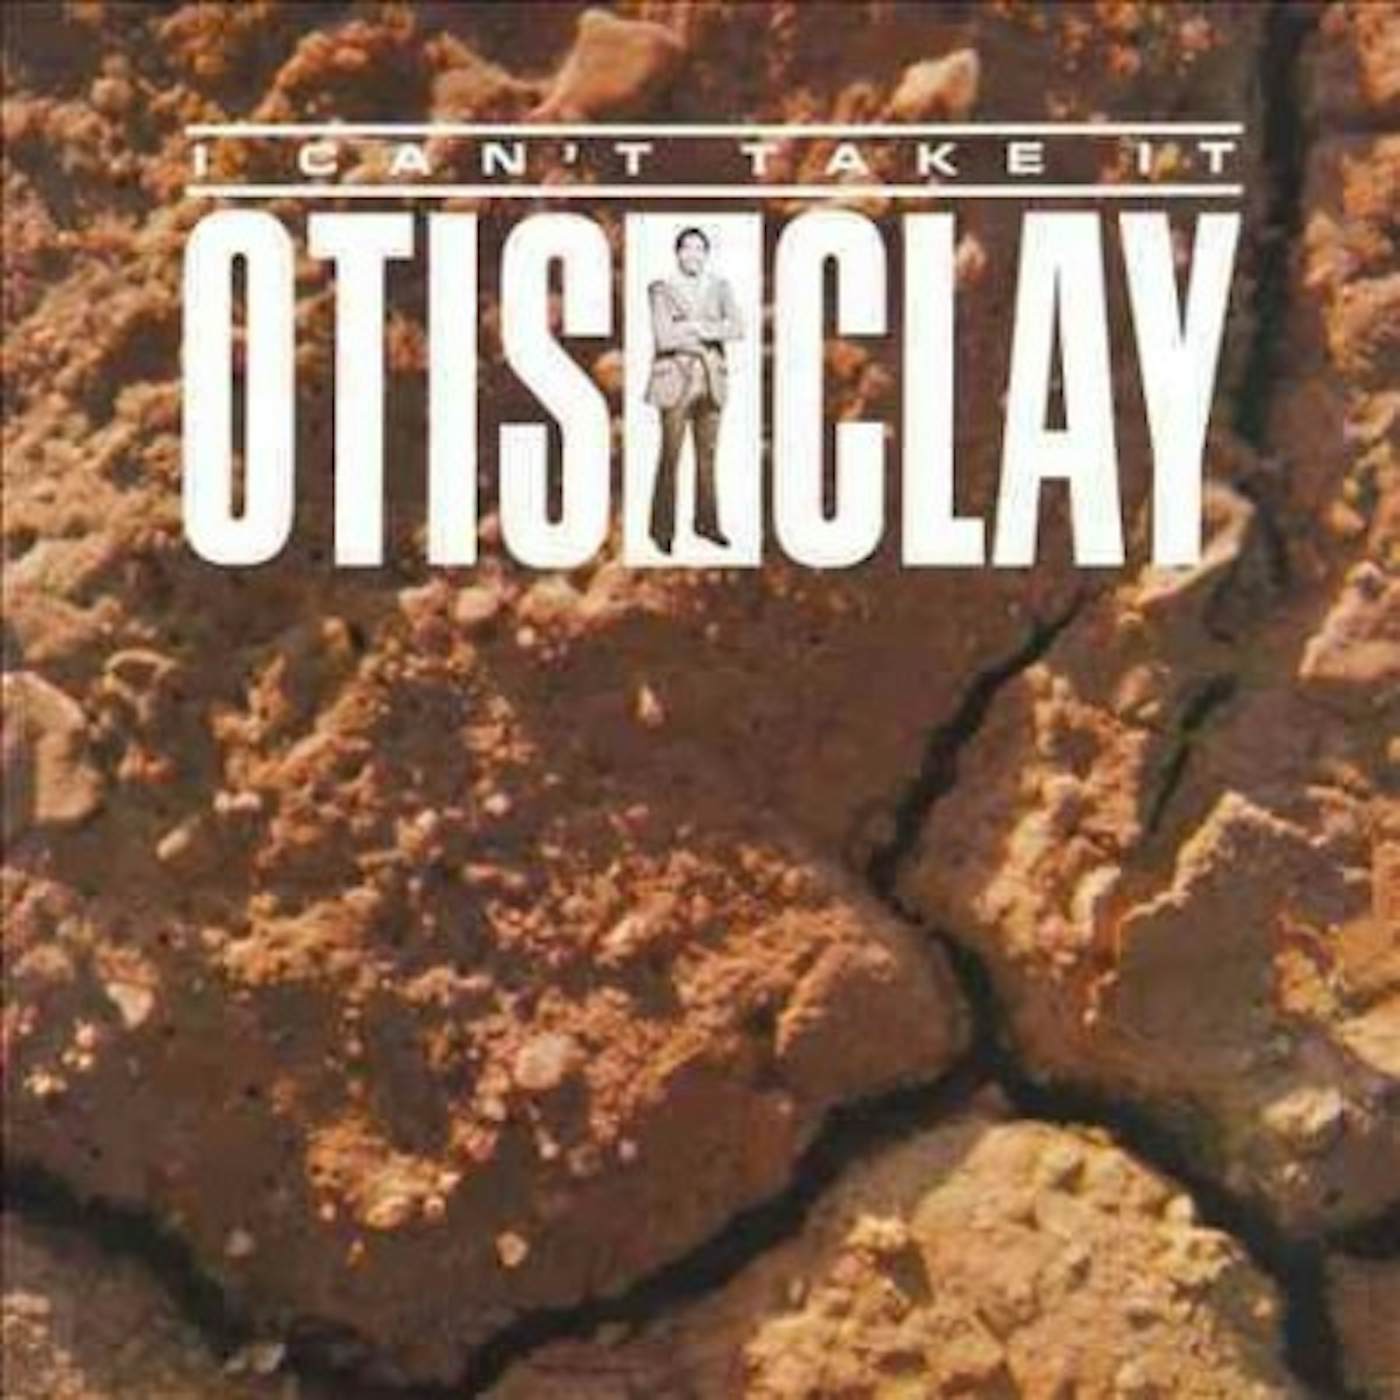 Otis Clay I Can't Take It Vinyl Record